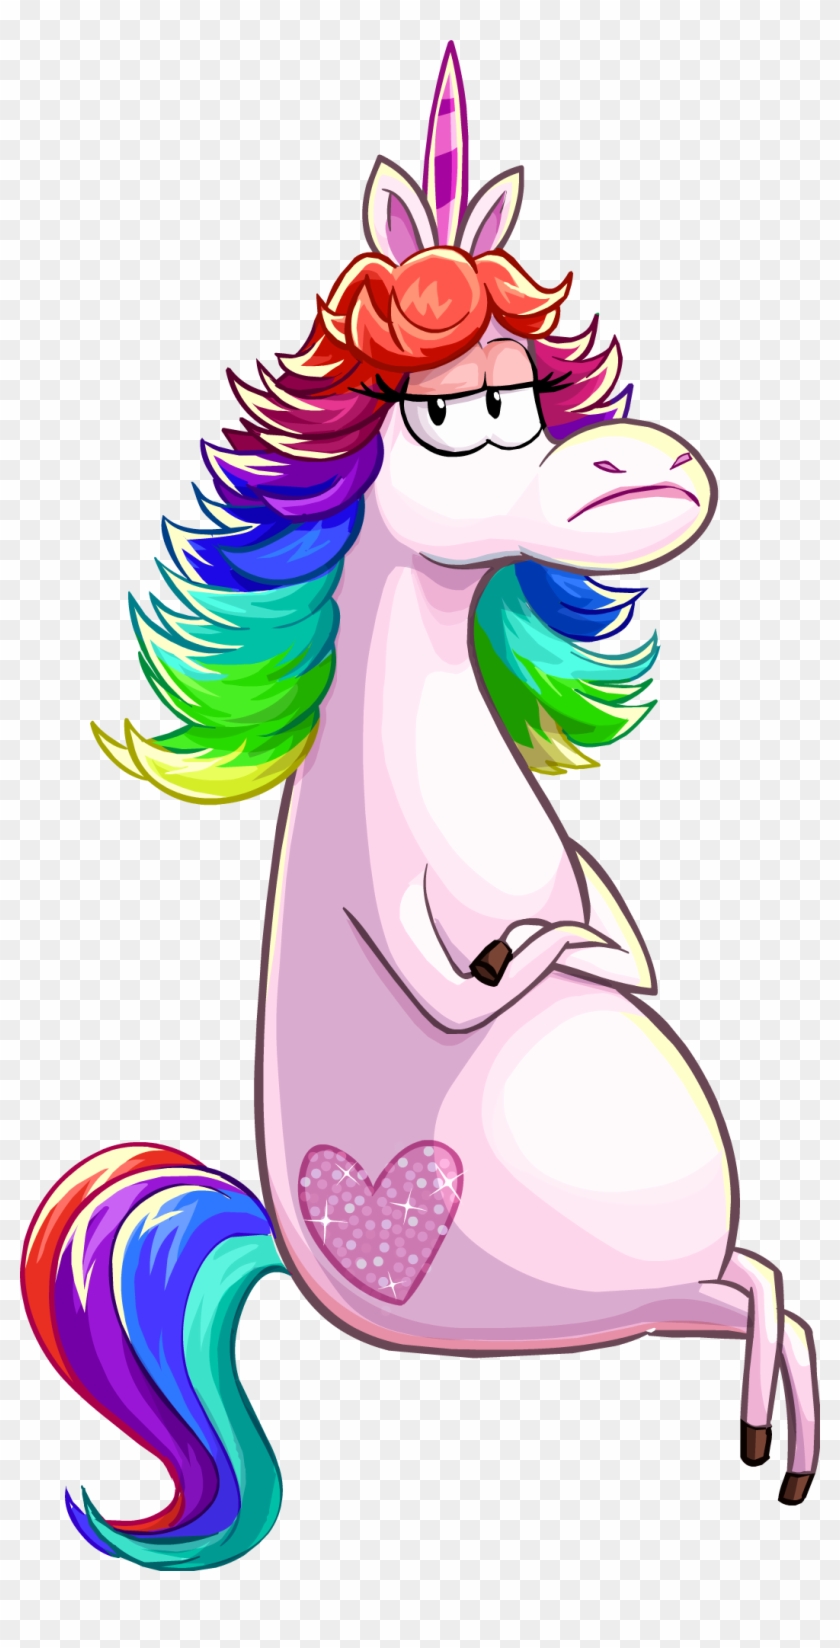 Rainbow Unicorn Inside Out - Rainbow Unicorn Inside Out #237880